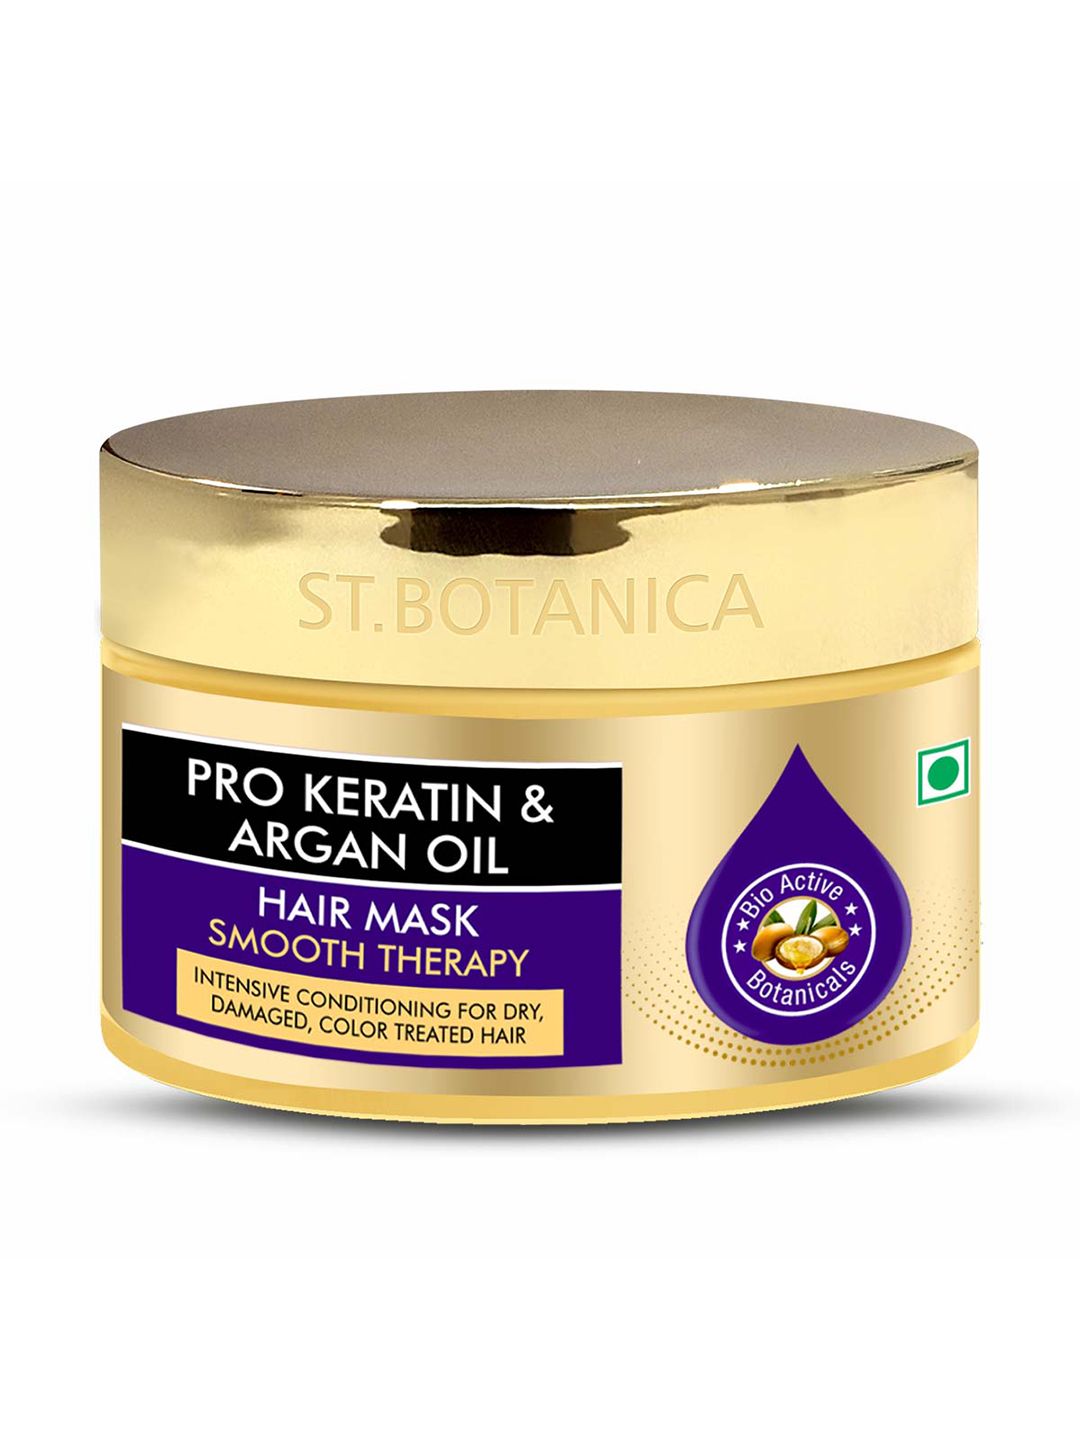 StBotanica Pro Keratin & Argan Oil Hair Mask 200 ml Price in India